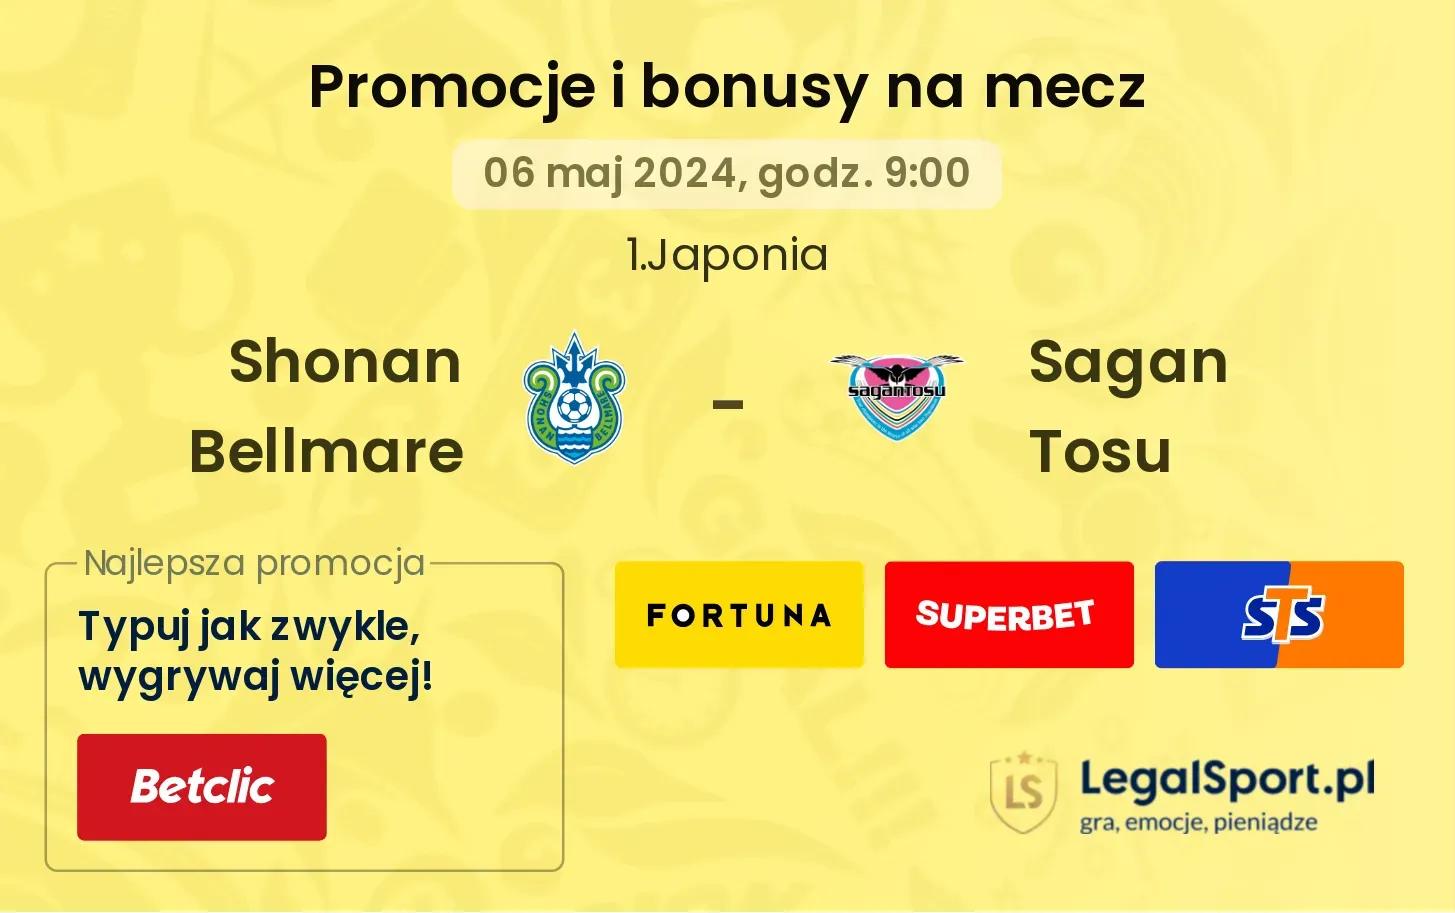 Shonan Bellmare - Sagan Tosu promocje bonusy na mecz